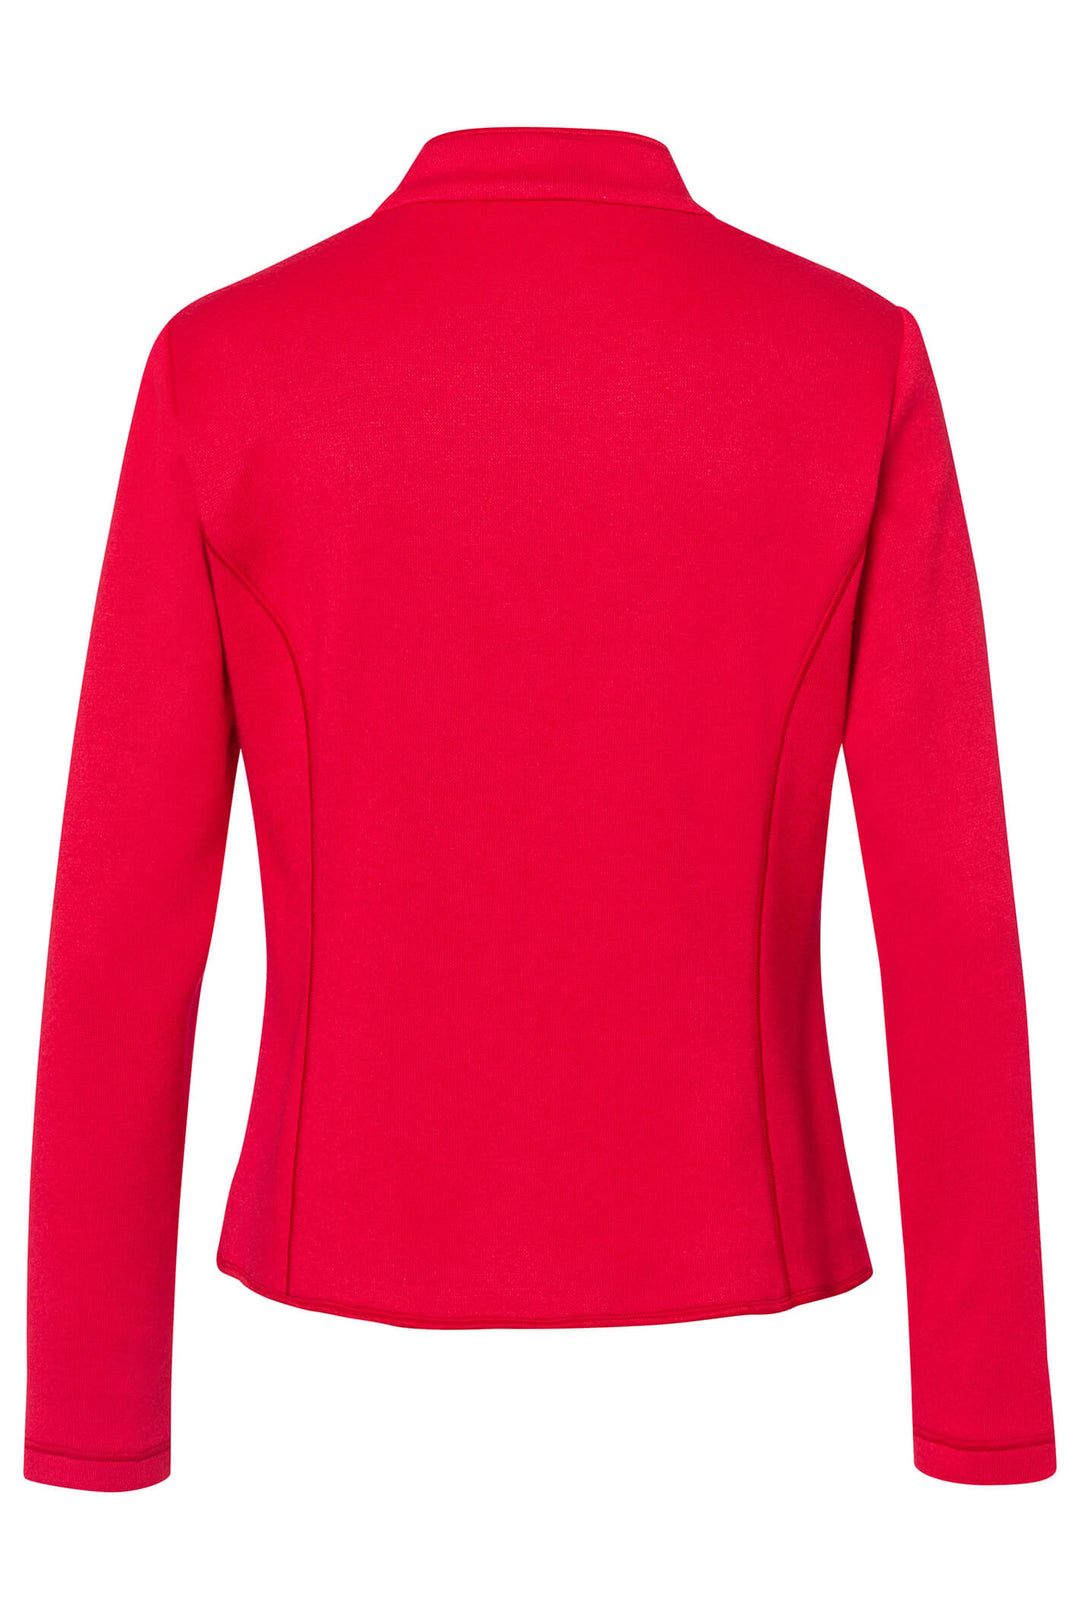 Frank Walder 723003 000 337 Red Two Button High Collar Jacket - Shirley Allum Boutique